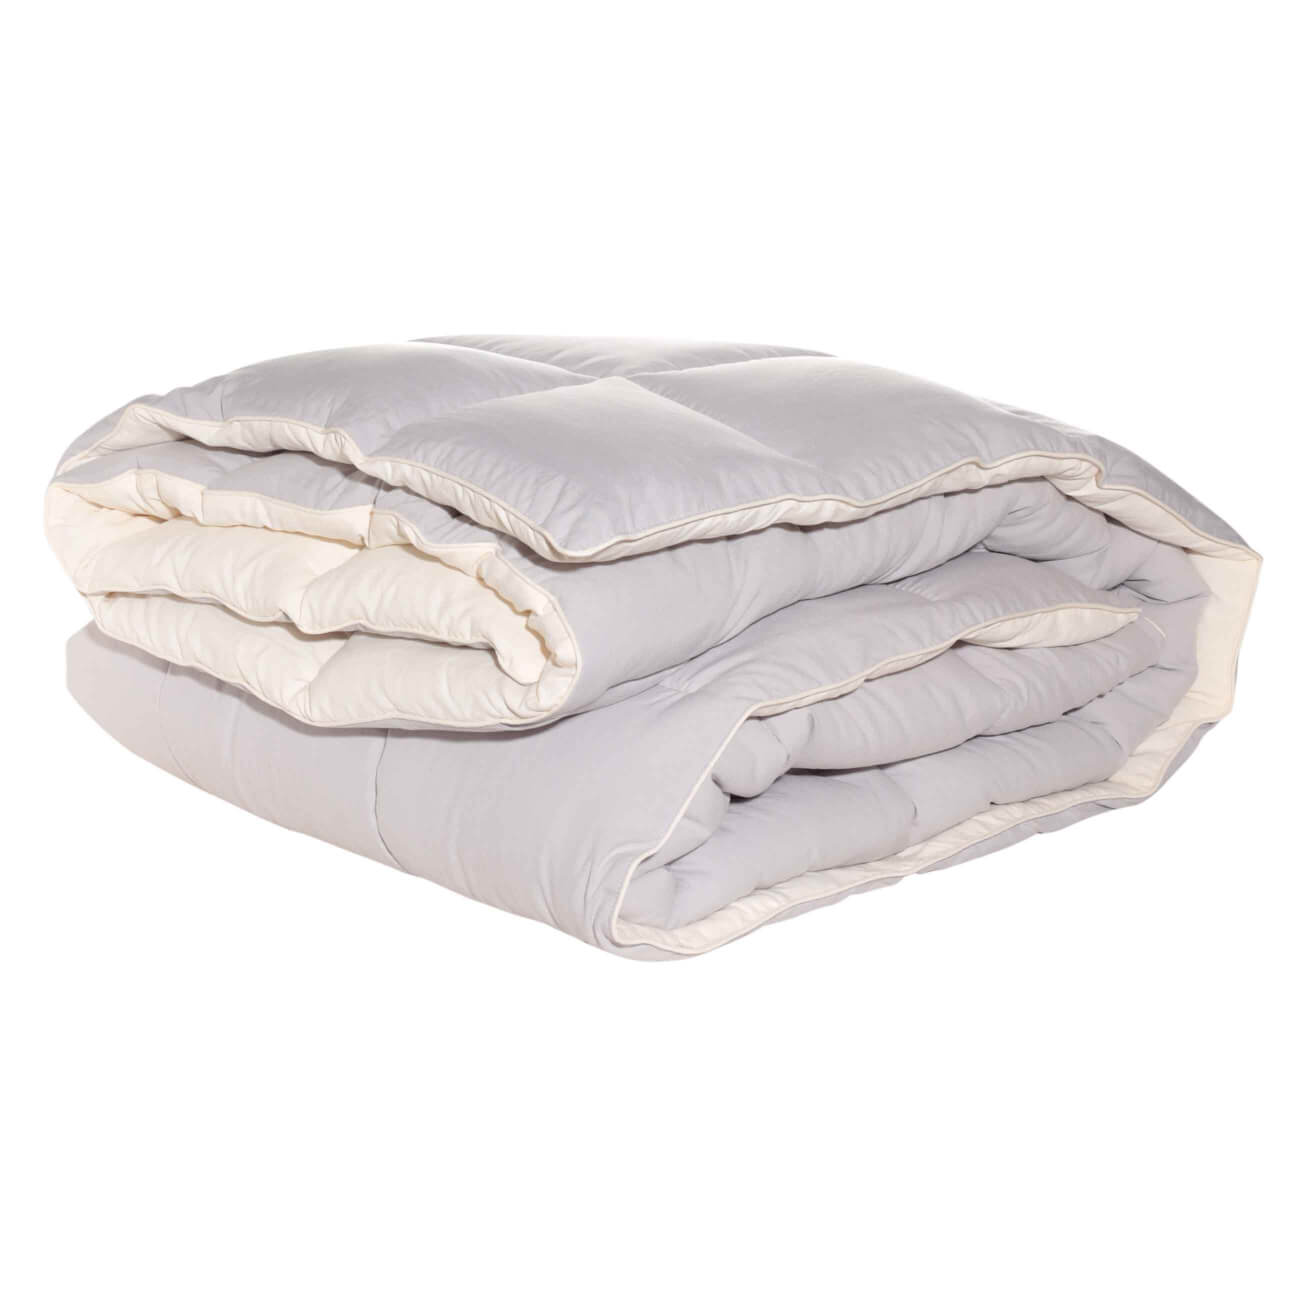 Одеяло, 200х220 см, микрофибра/холлофайбер, бежевое/молочное, Hollow fiber - фото 1